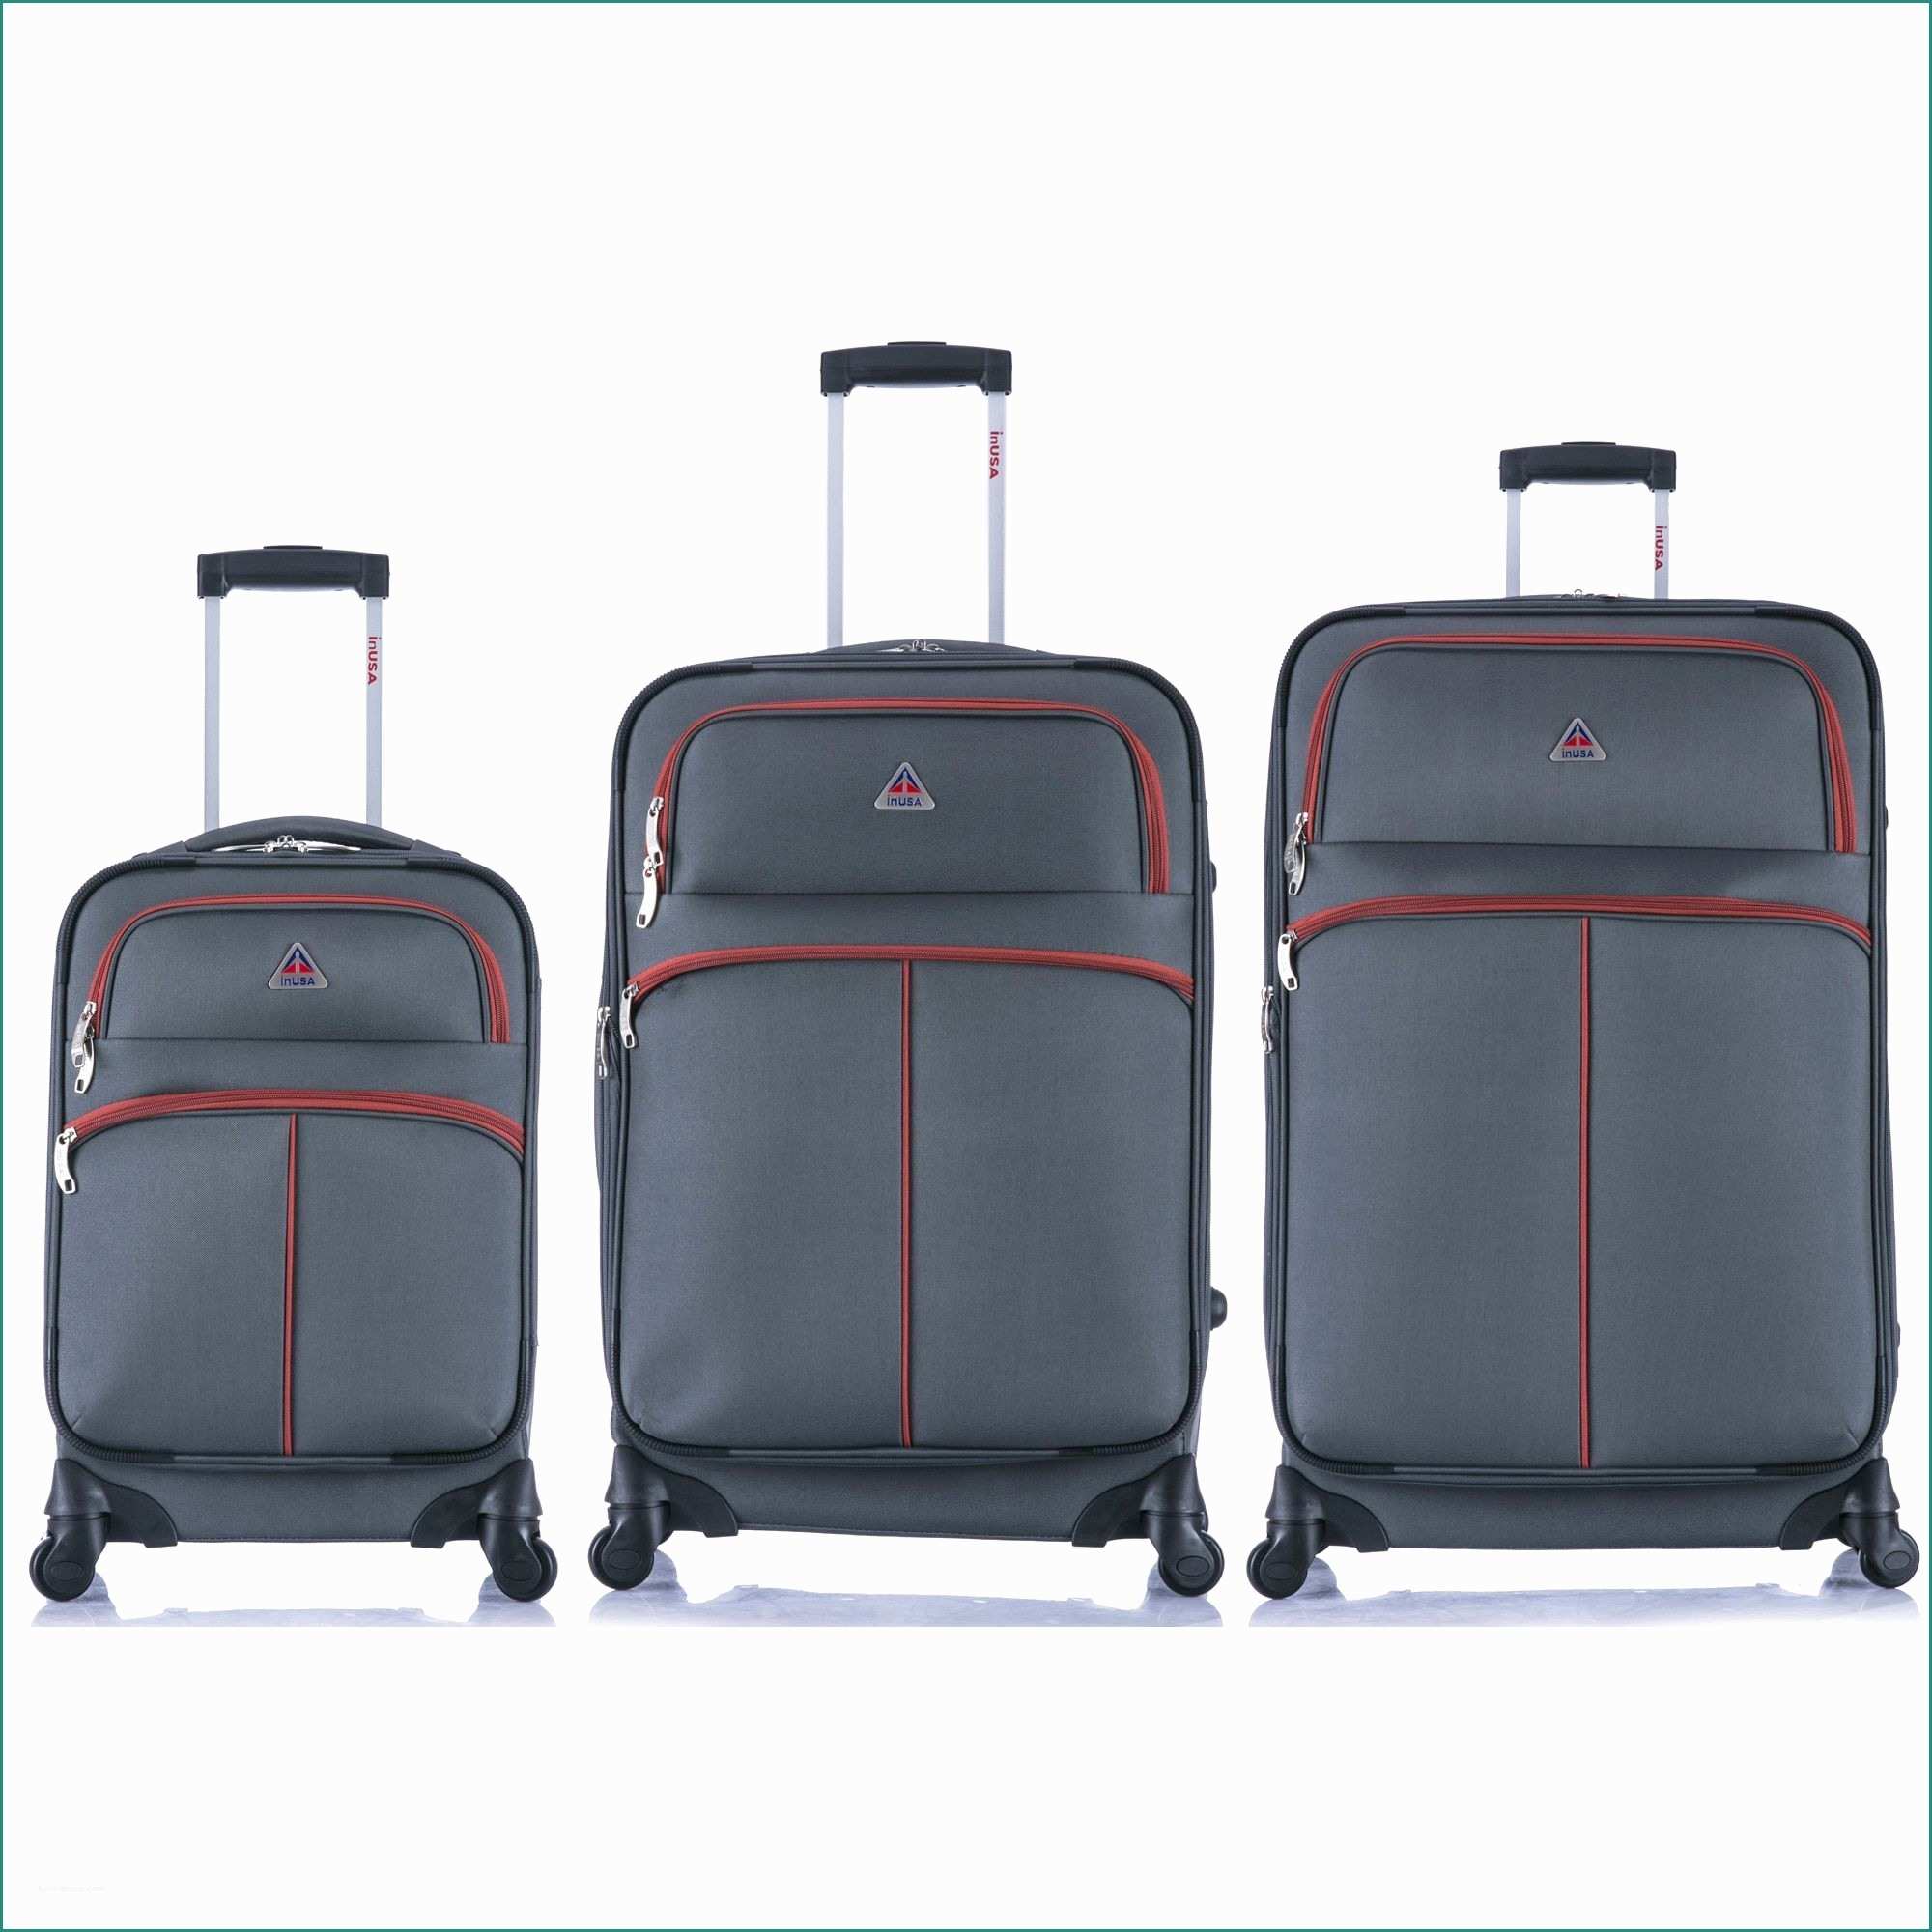 InUSA Roller FI 3 piece Lightweight Softside Spinner Luggage Set